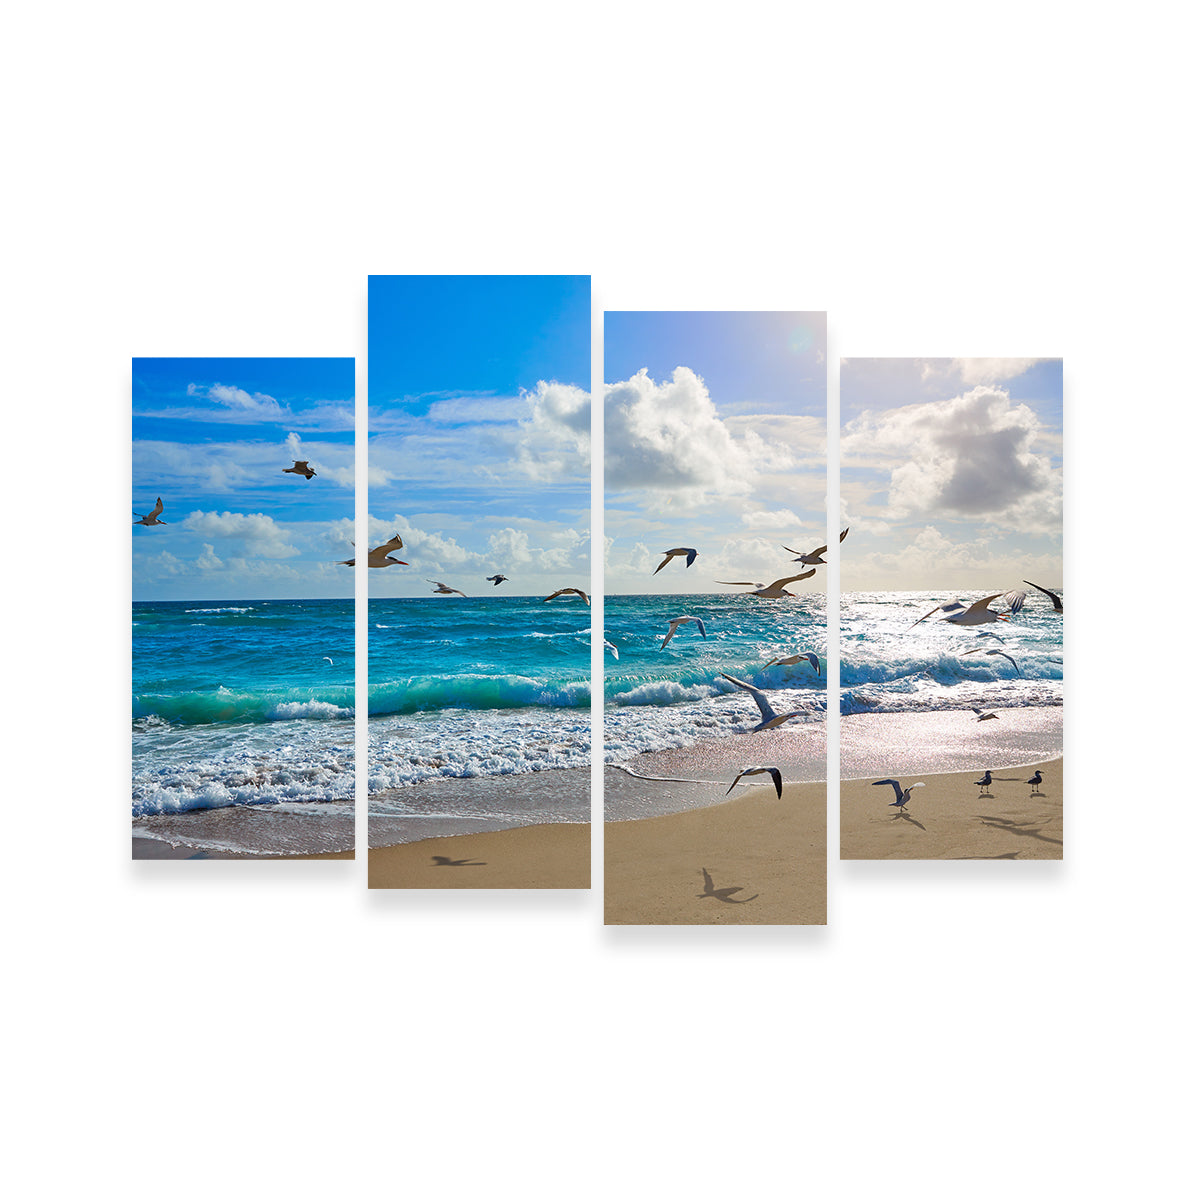 Singer Island Beach Seagulls